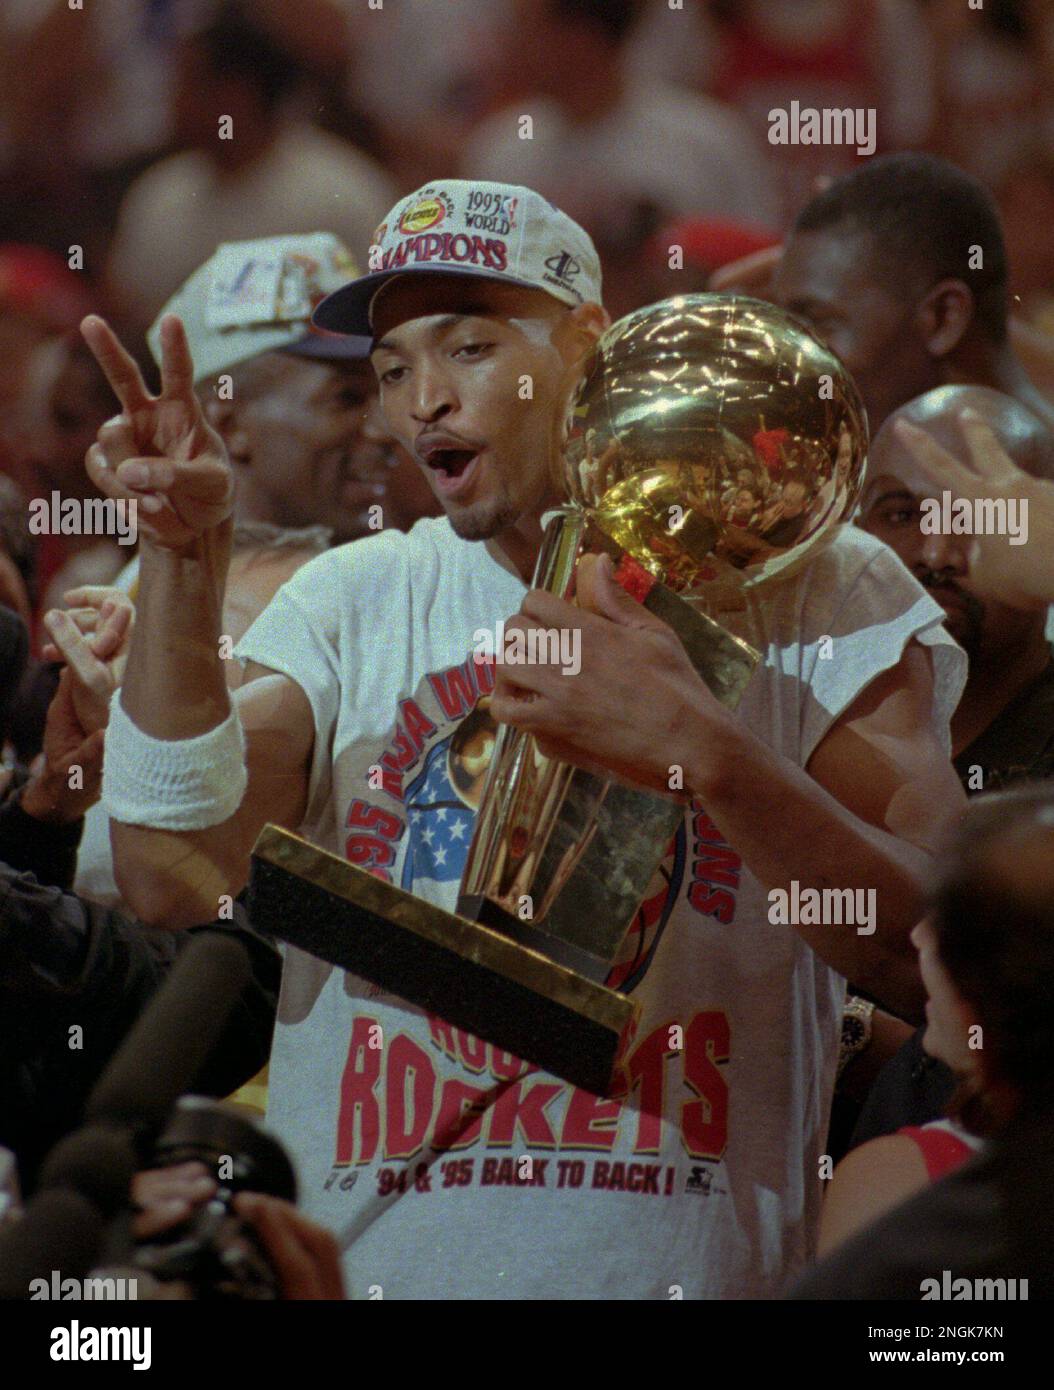 Robert Horry picks '95 Rockets, '01 Lakers as his favorite NBA titles